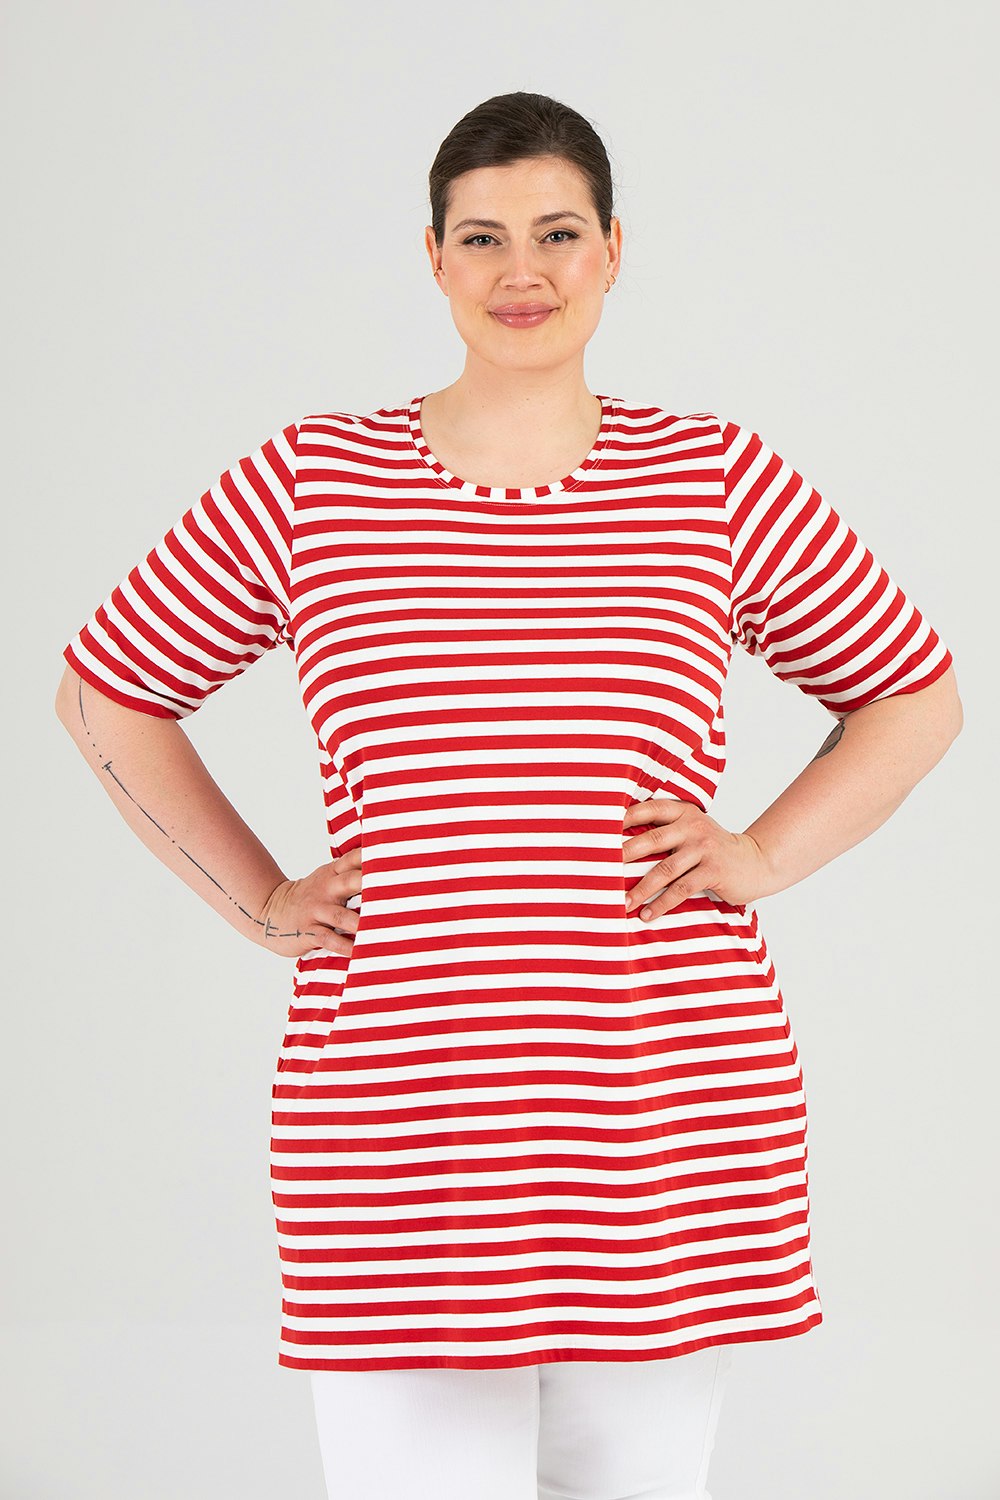 Penny dress/tunic red/white • Plus sizes • AliceDot.